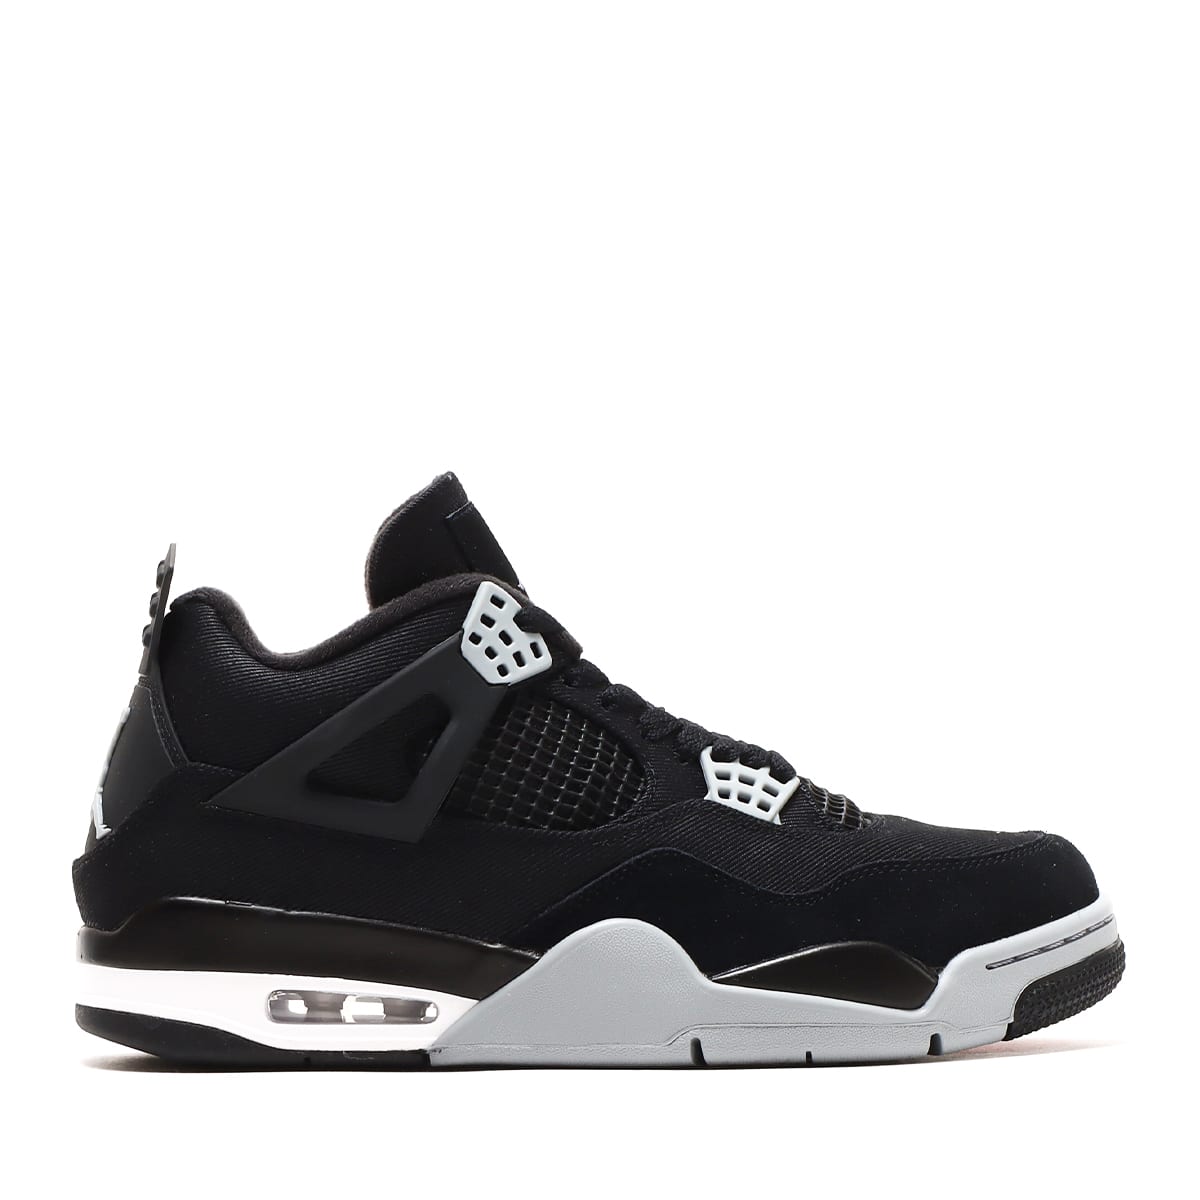 Nike Air Jordan 4 SE Black  サイズ27.5